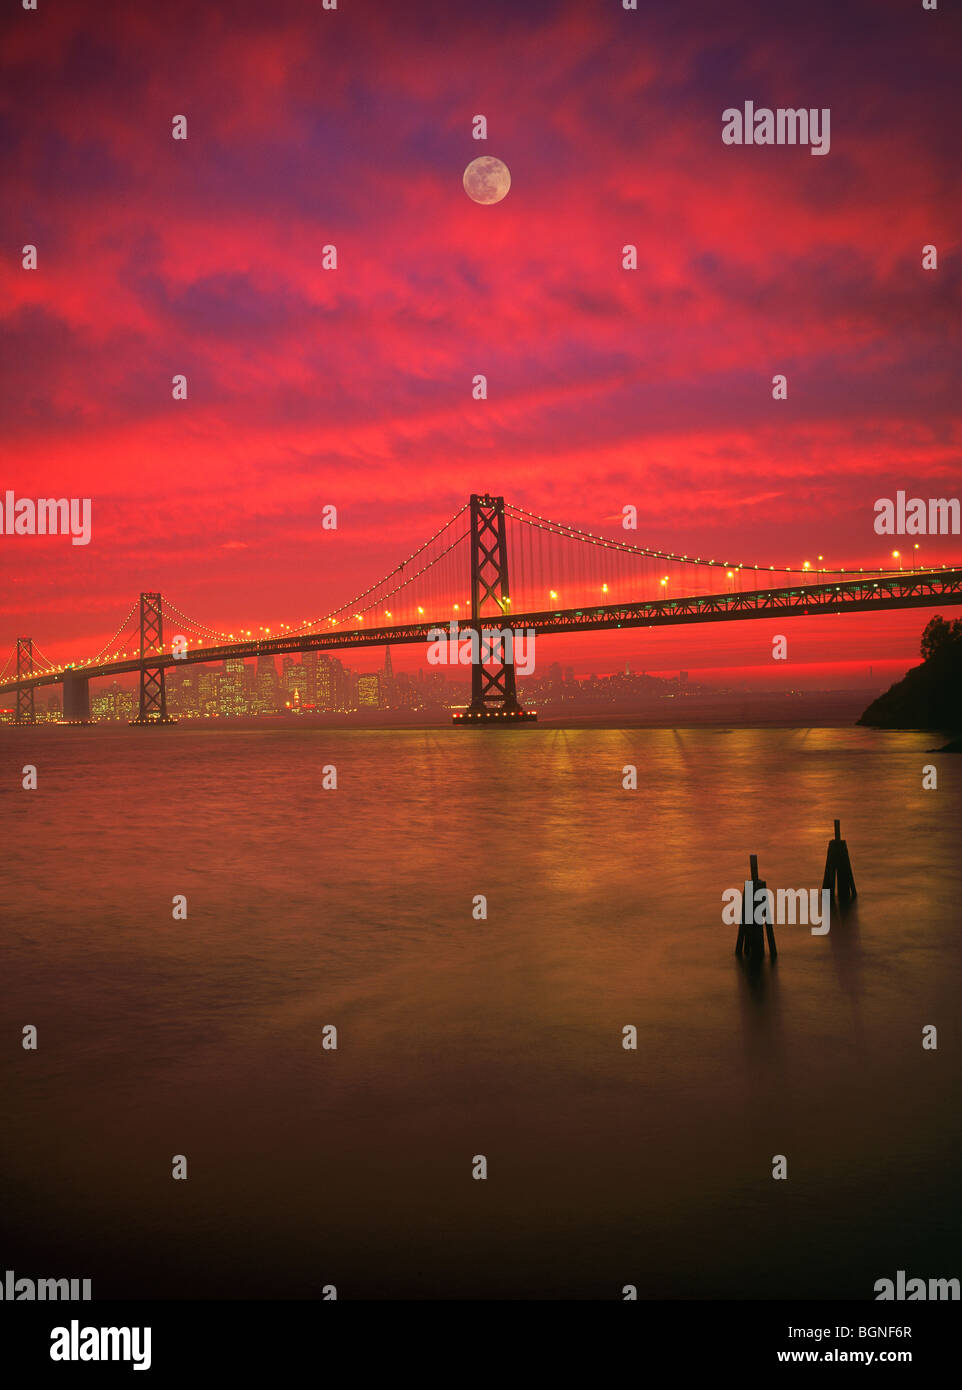 Oakland Bay Bridge di San Francisco Bay sotto la luna piena drammatico tramonto rosso del cielo Foto Stock